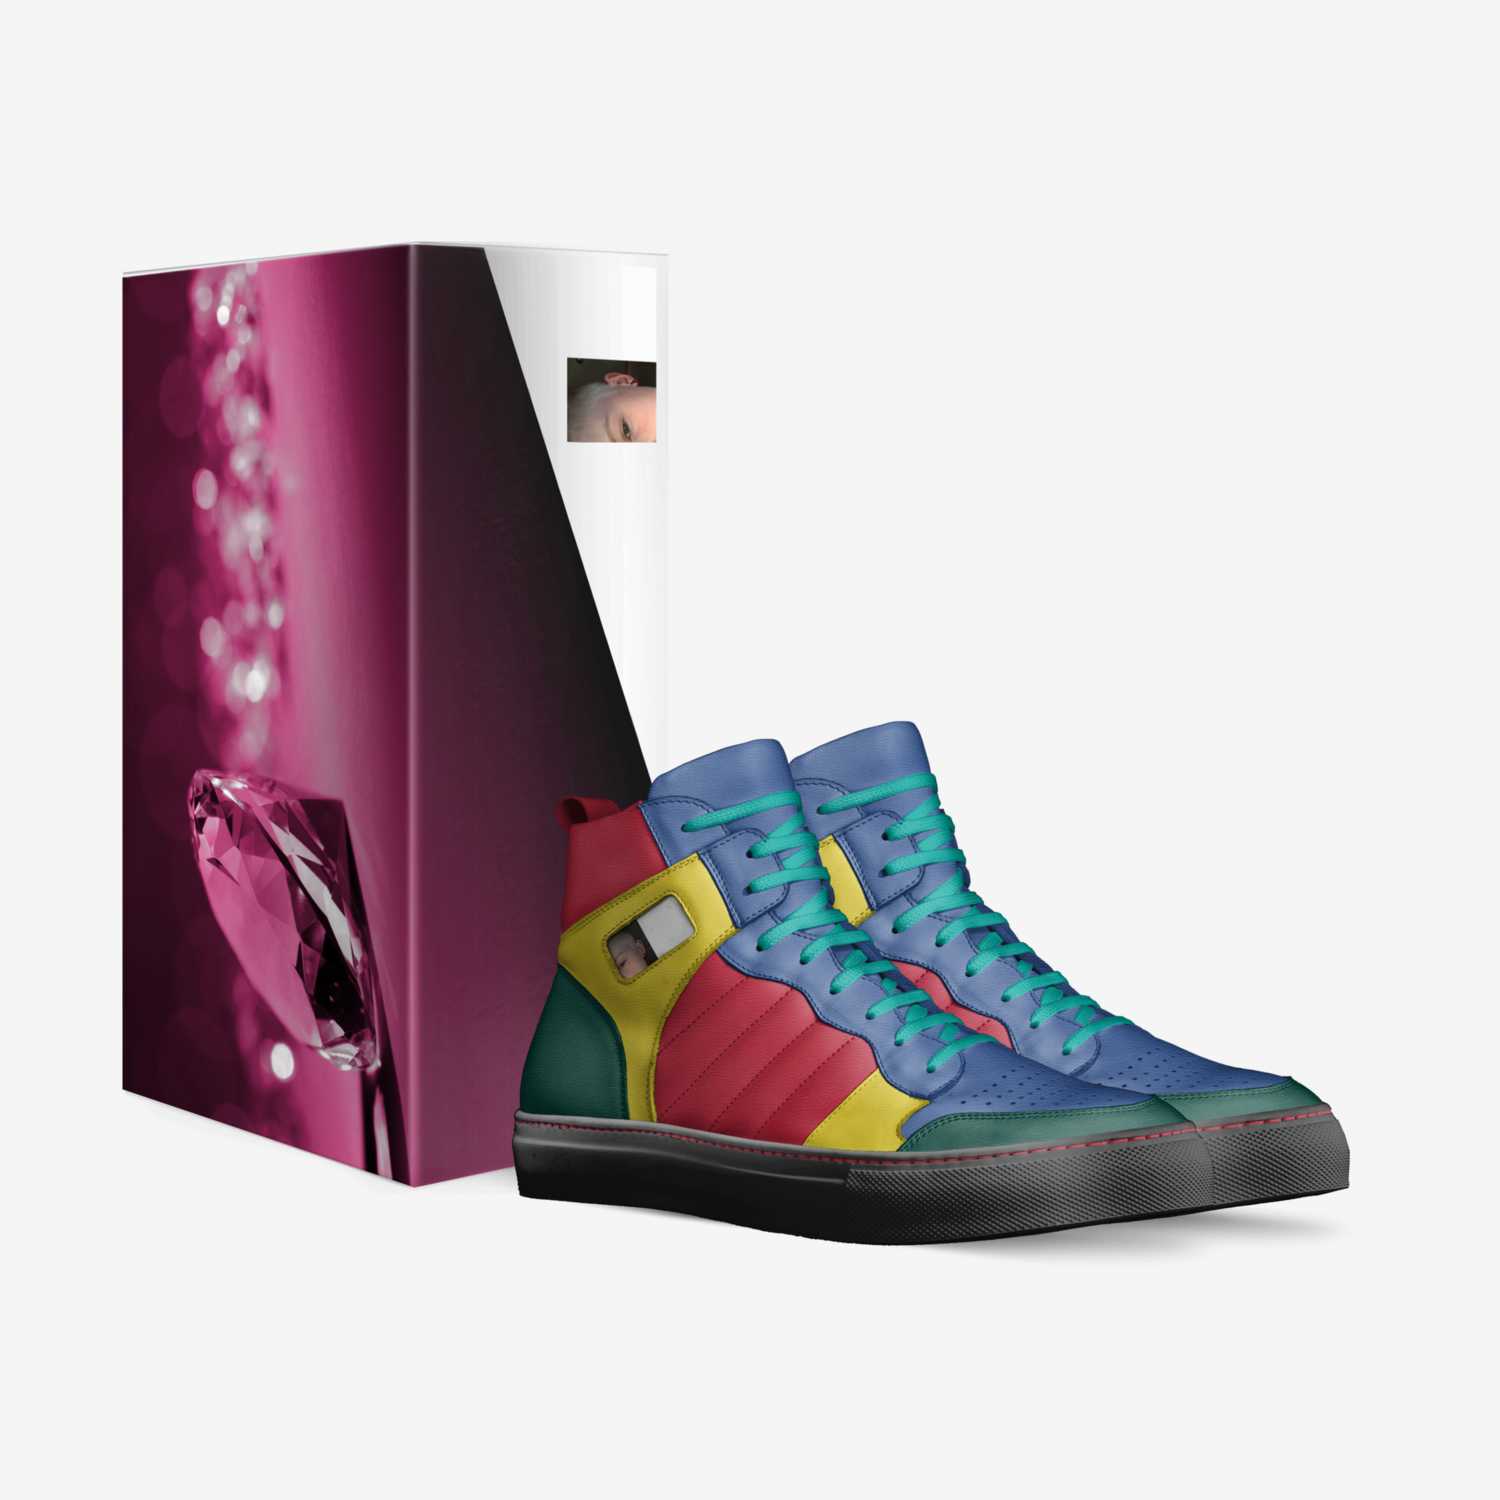 Jacob Tormala custom made in Italy shoes by Jacob Tormala | Box view